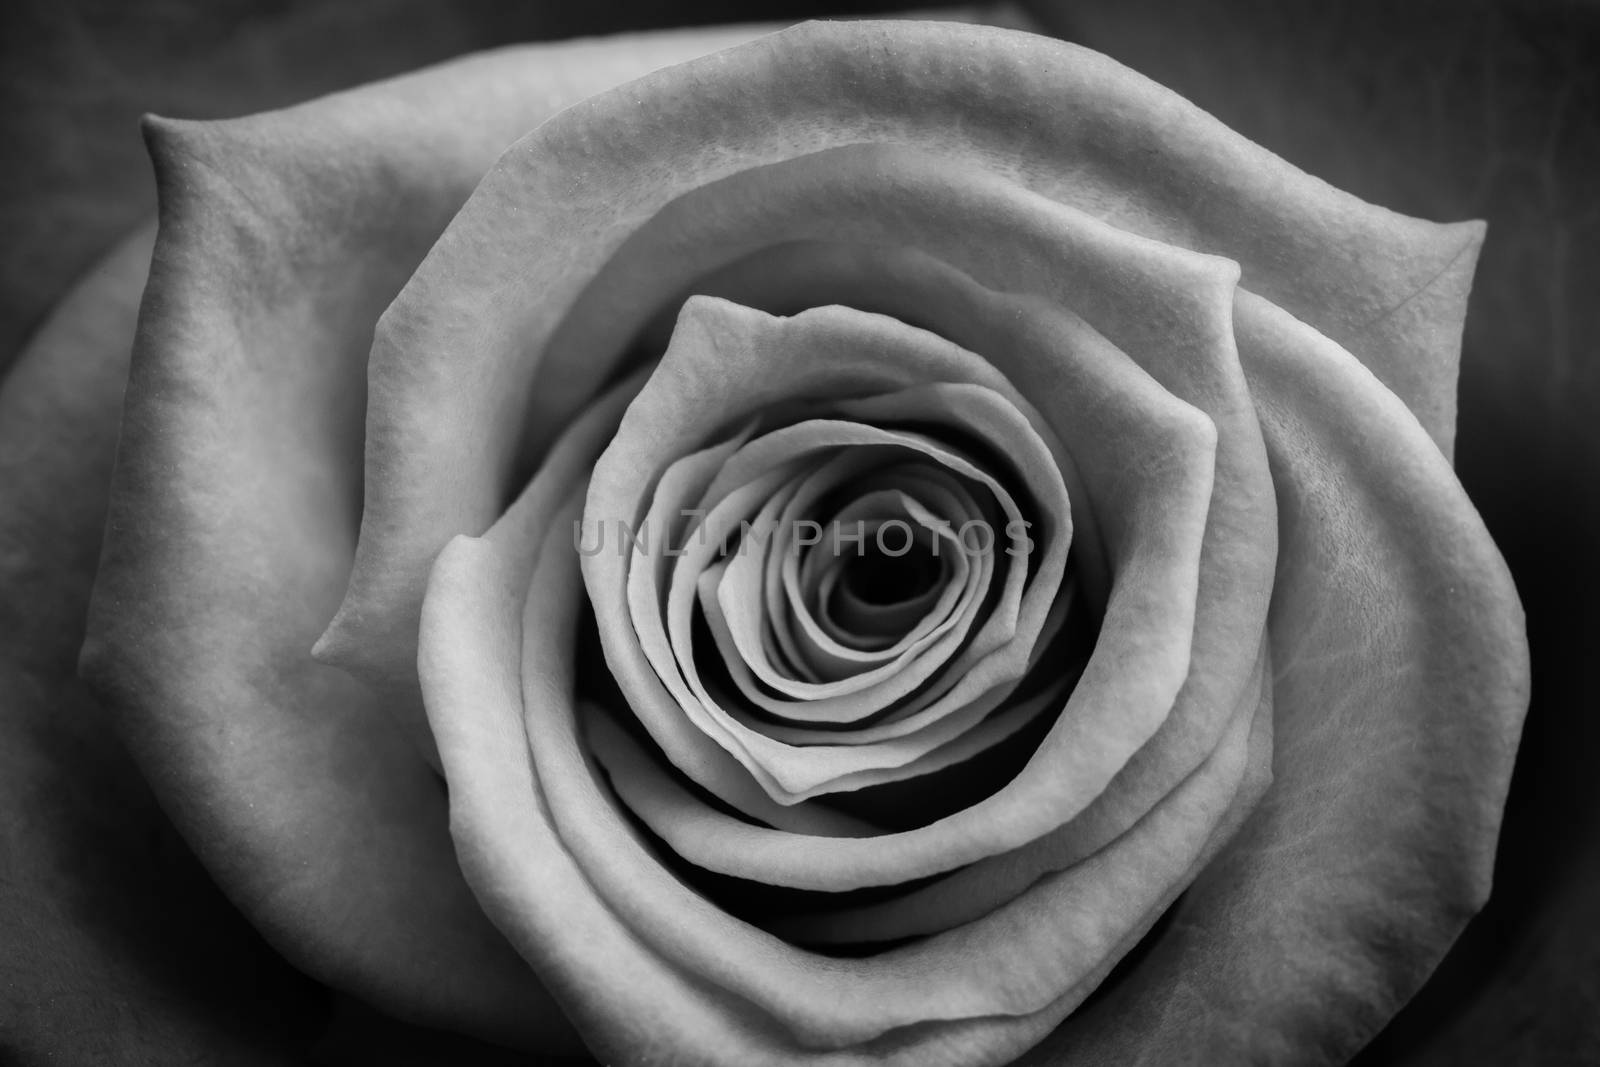 Rose in black and white by Wavebreakmedia